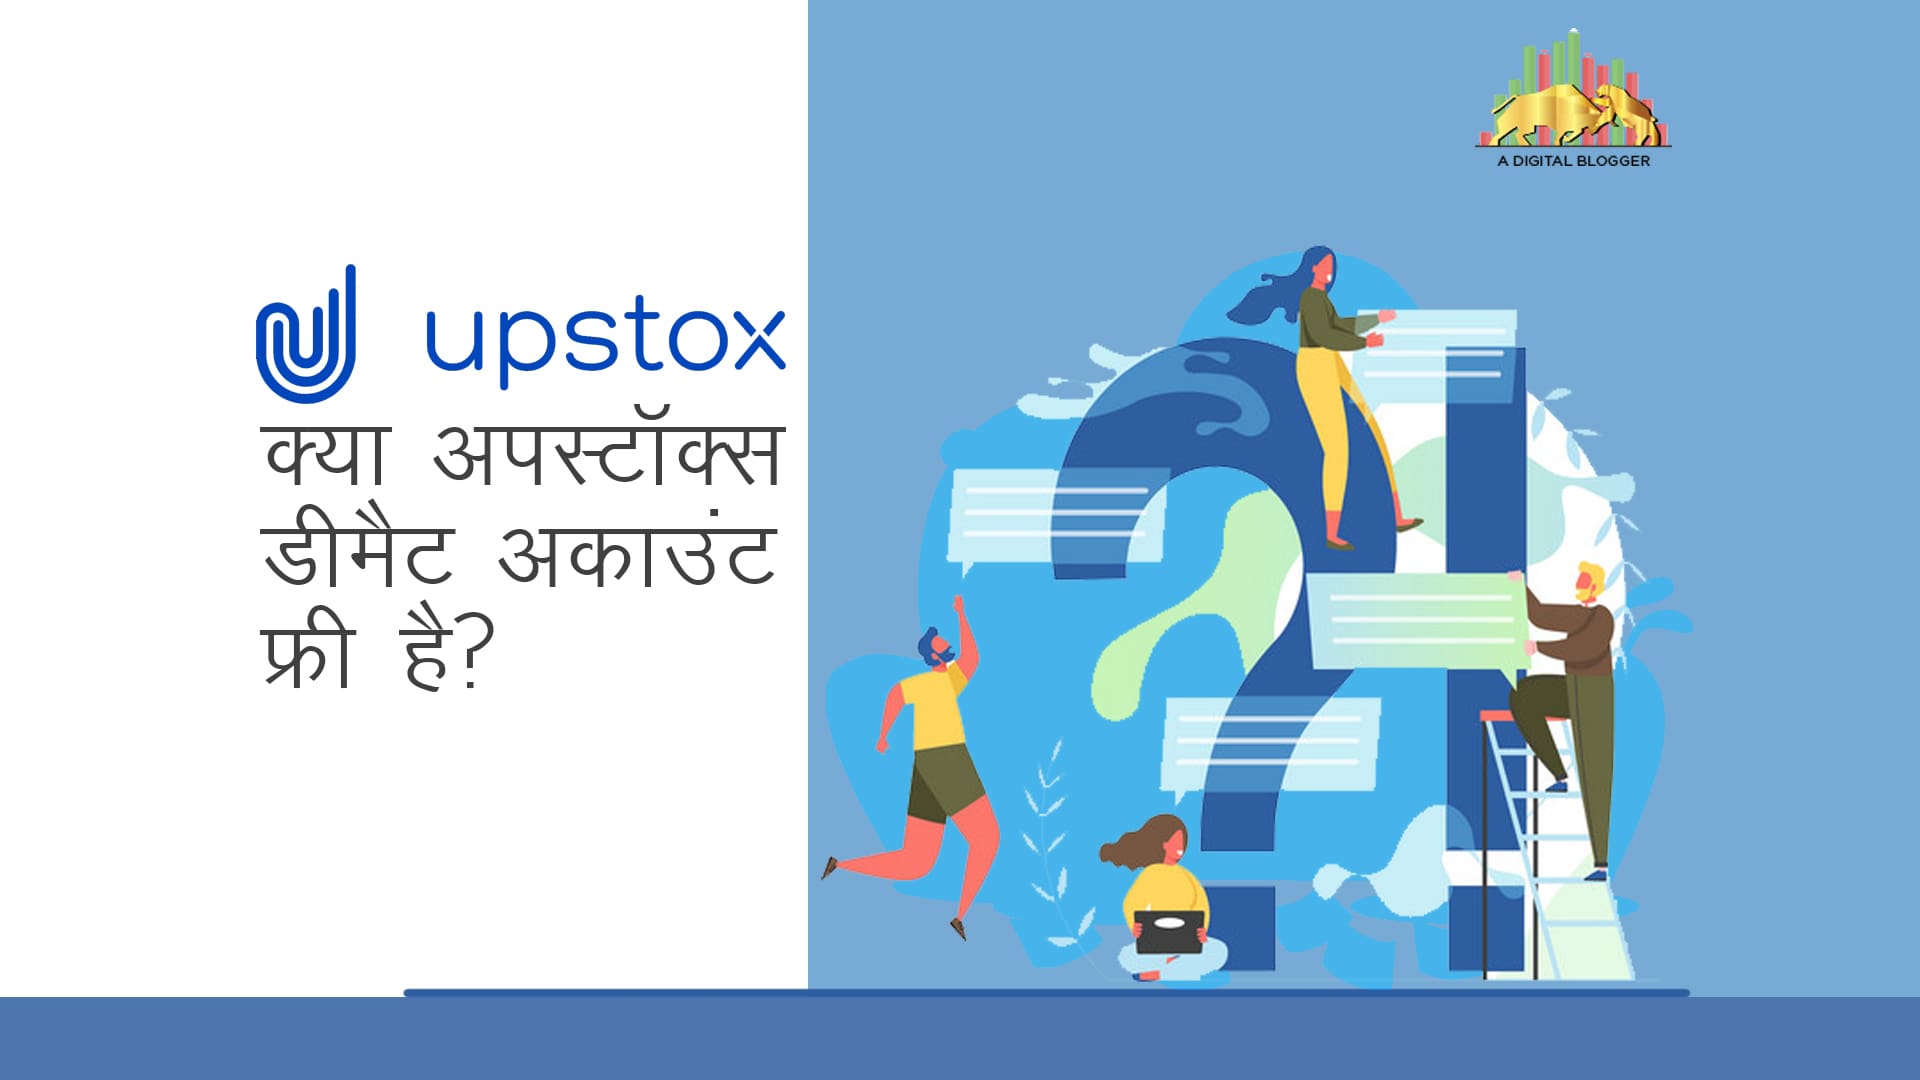 Is Upstox Demat Account Free in Hindi | अ डिजिटल ब्लॉगर